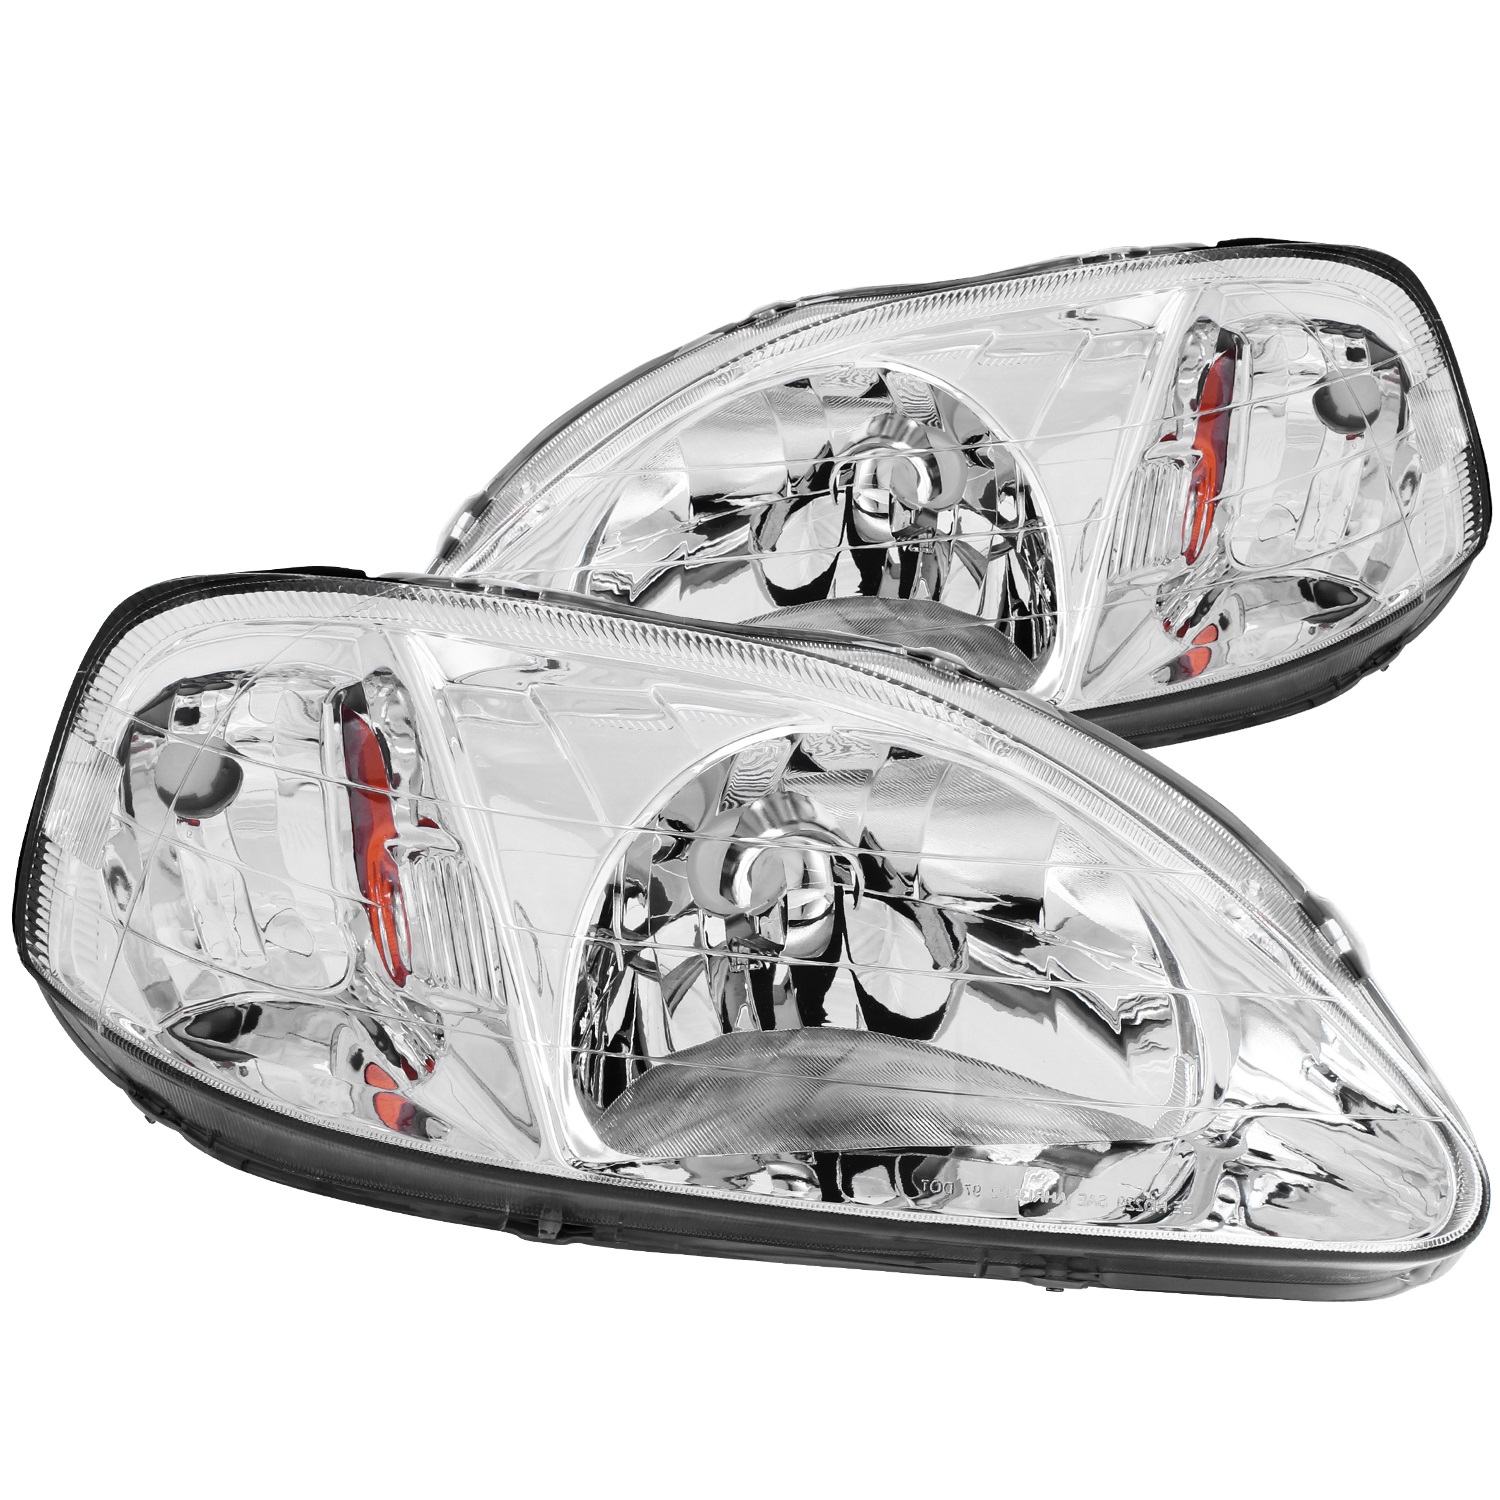 Anzo USA Anzo USA 121179 Crystal Headlight Set Fits 99-00 Civic